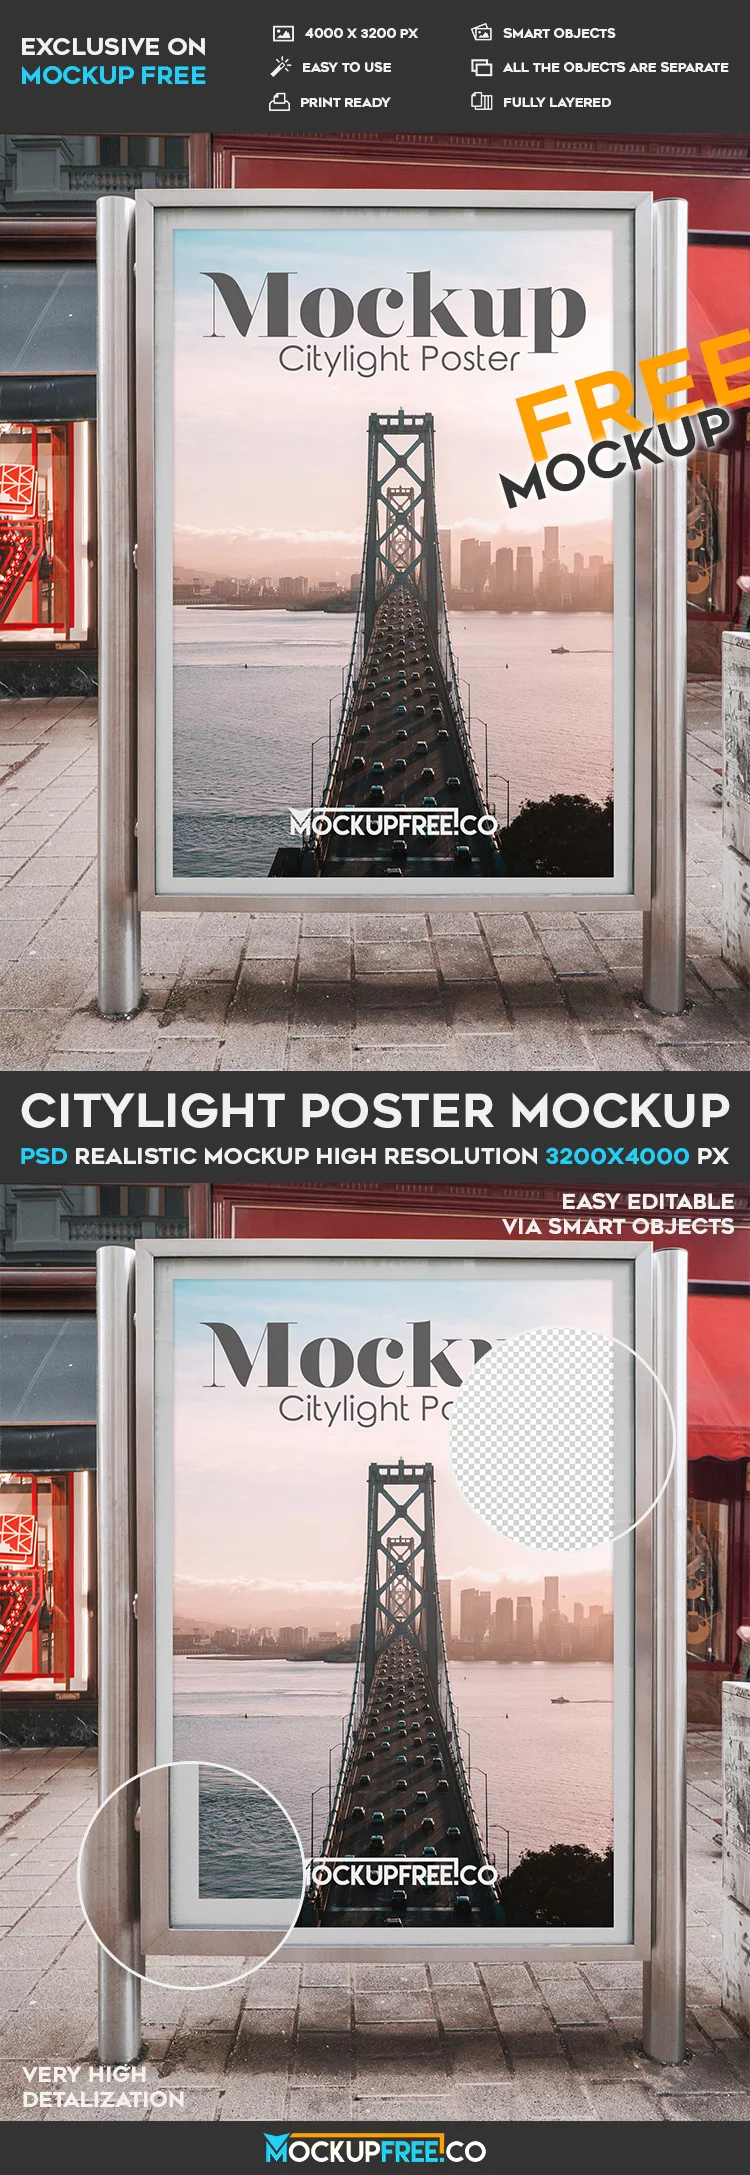 Free Citylight Poster PSD Mockup